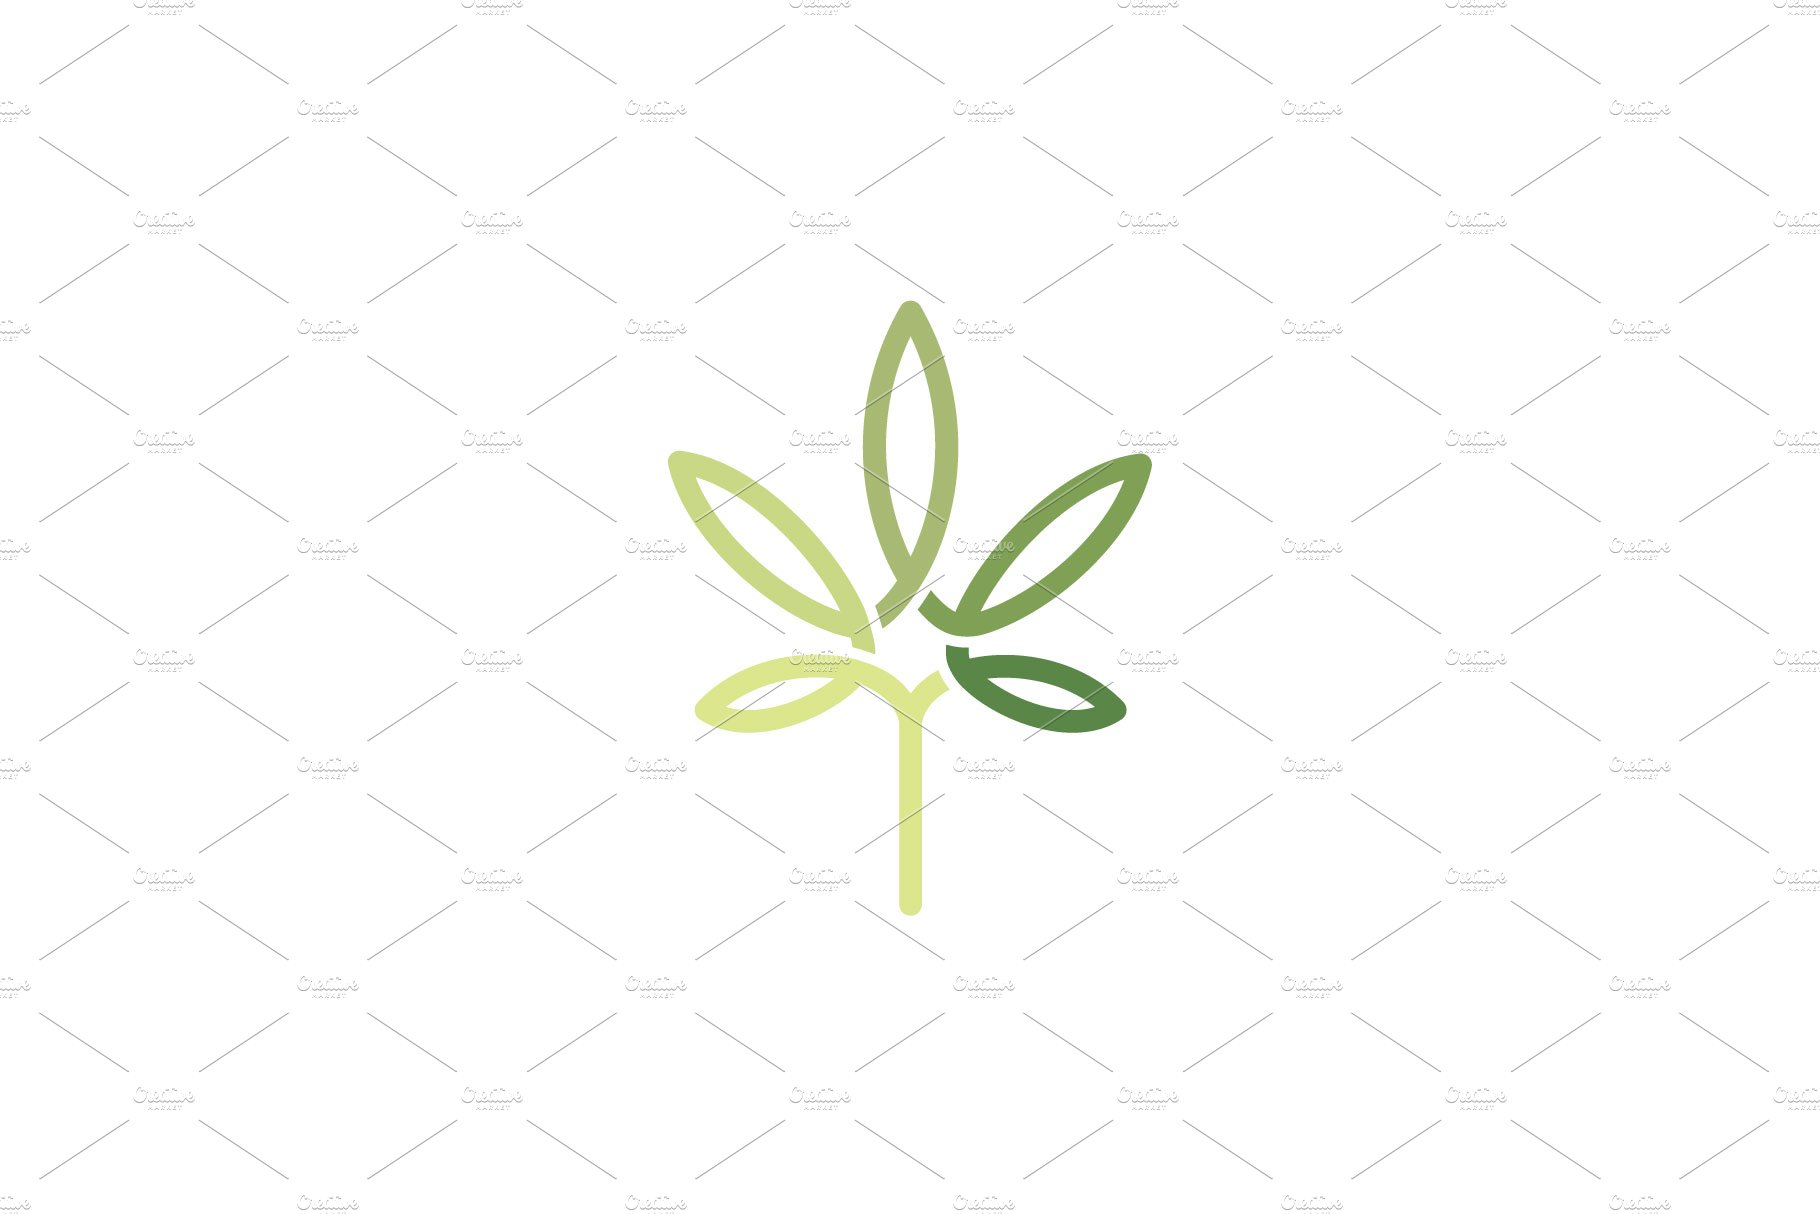 Simple Cannabis Leaf Mono Line Logo cover image.